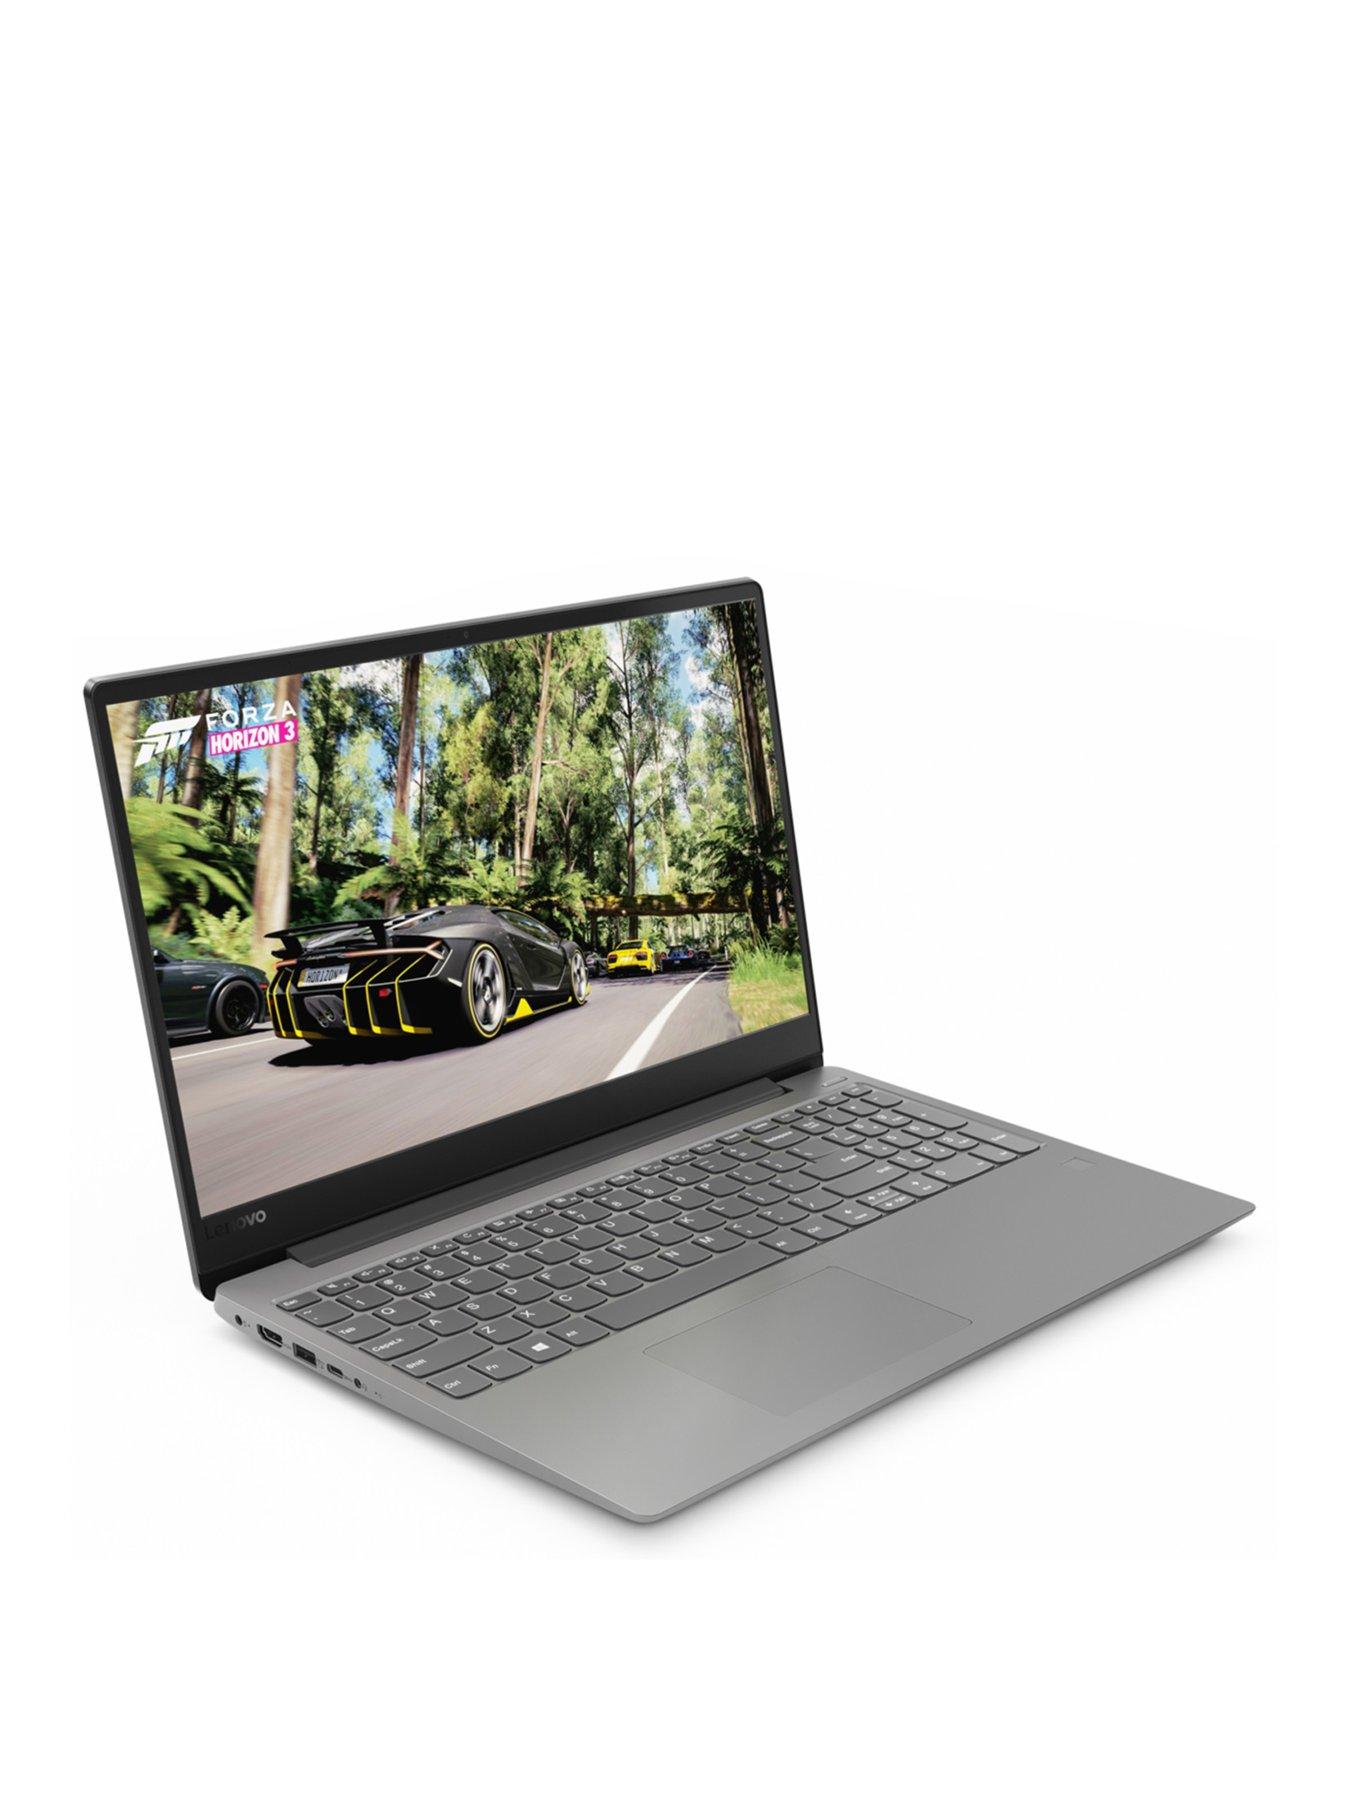 Lenovo Ideapad 330S-15Ikb Intel Core I5, 4Gb Ram, 1Tb Hard Drive, 15.6 Inch Laptop – Laptop Only